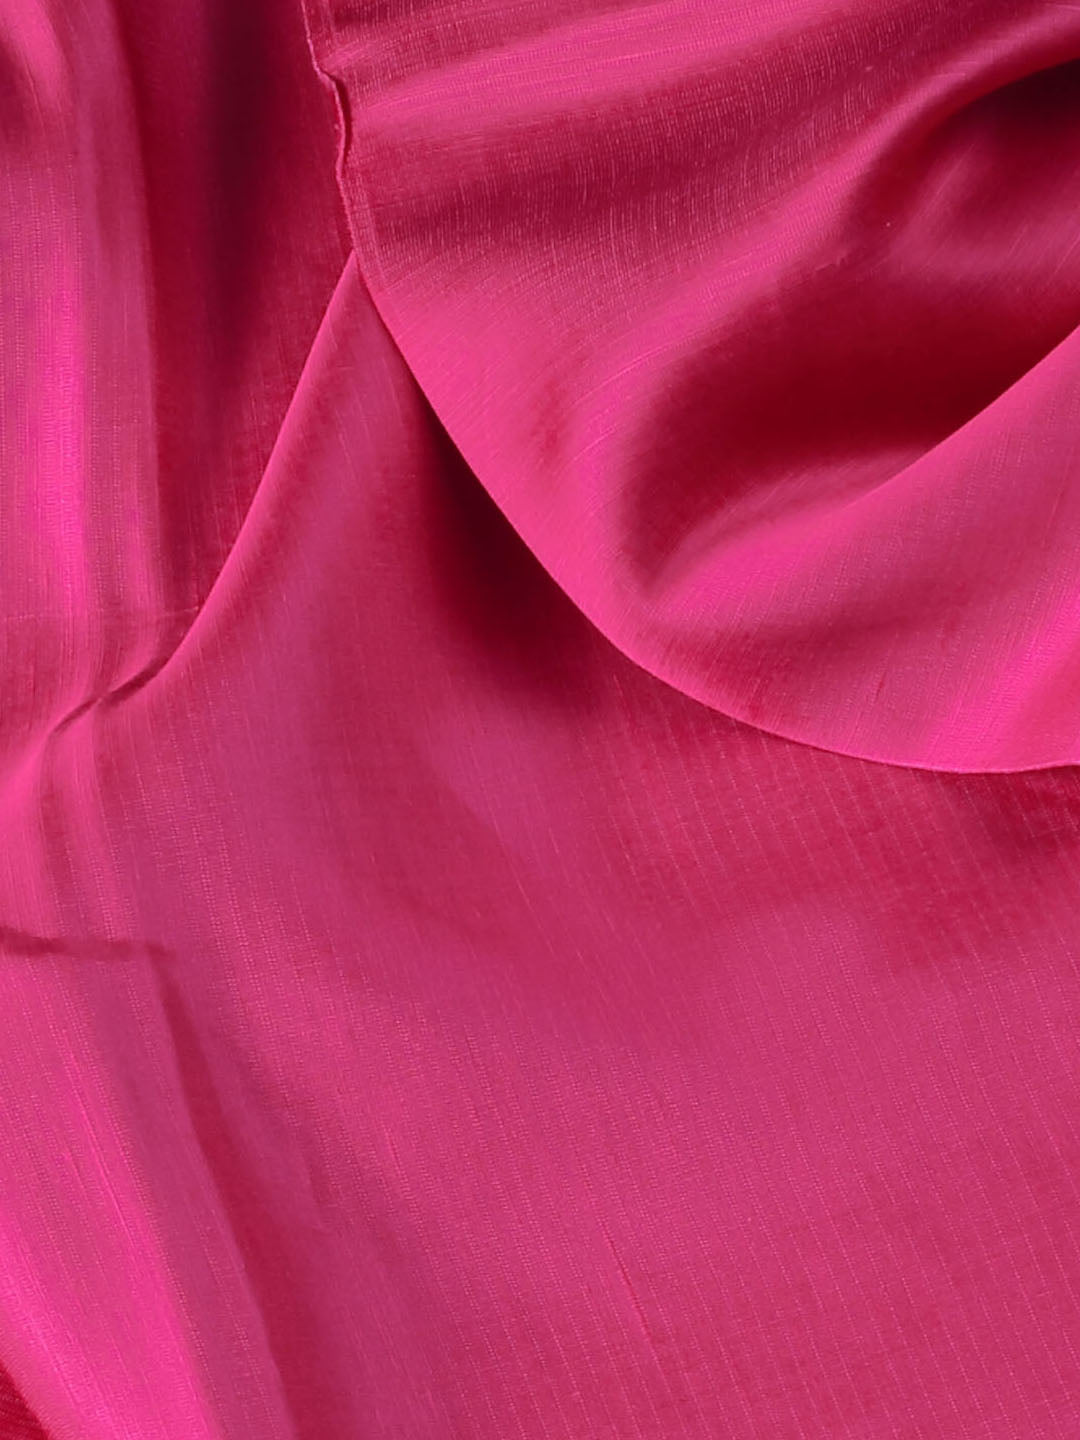 Magenta Pink Linen Satin Fabric